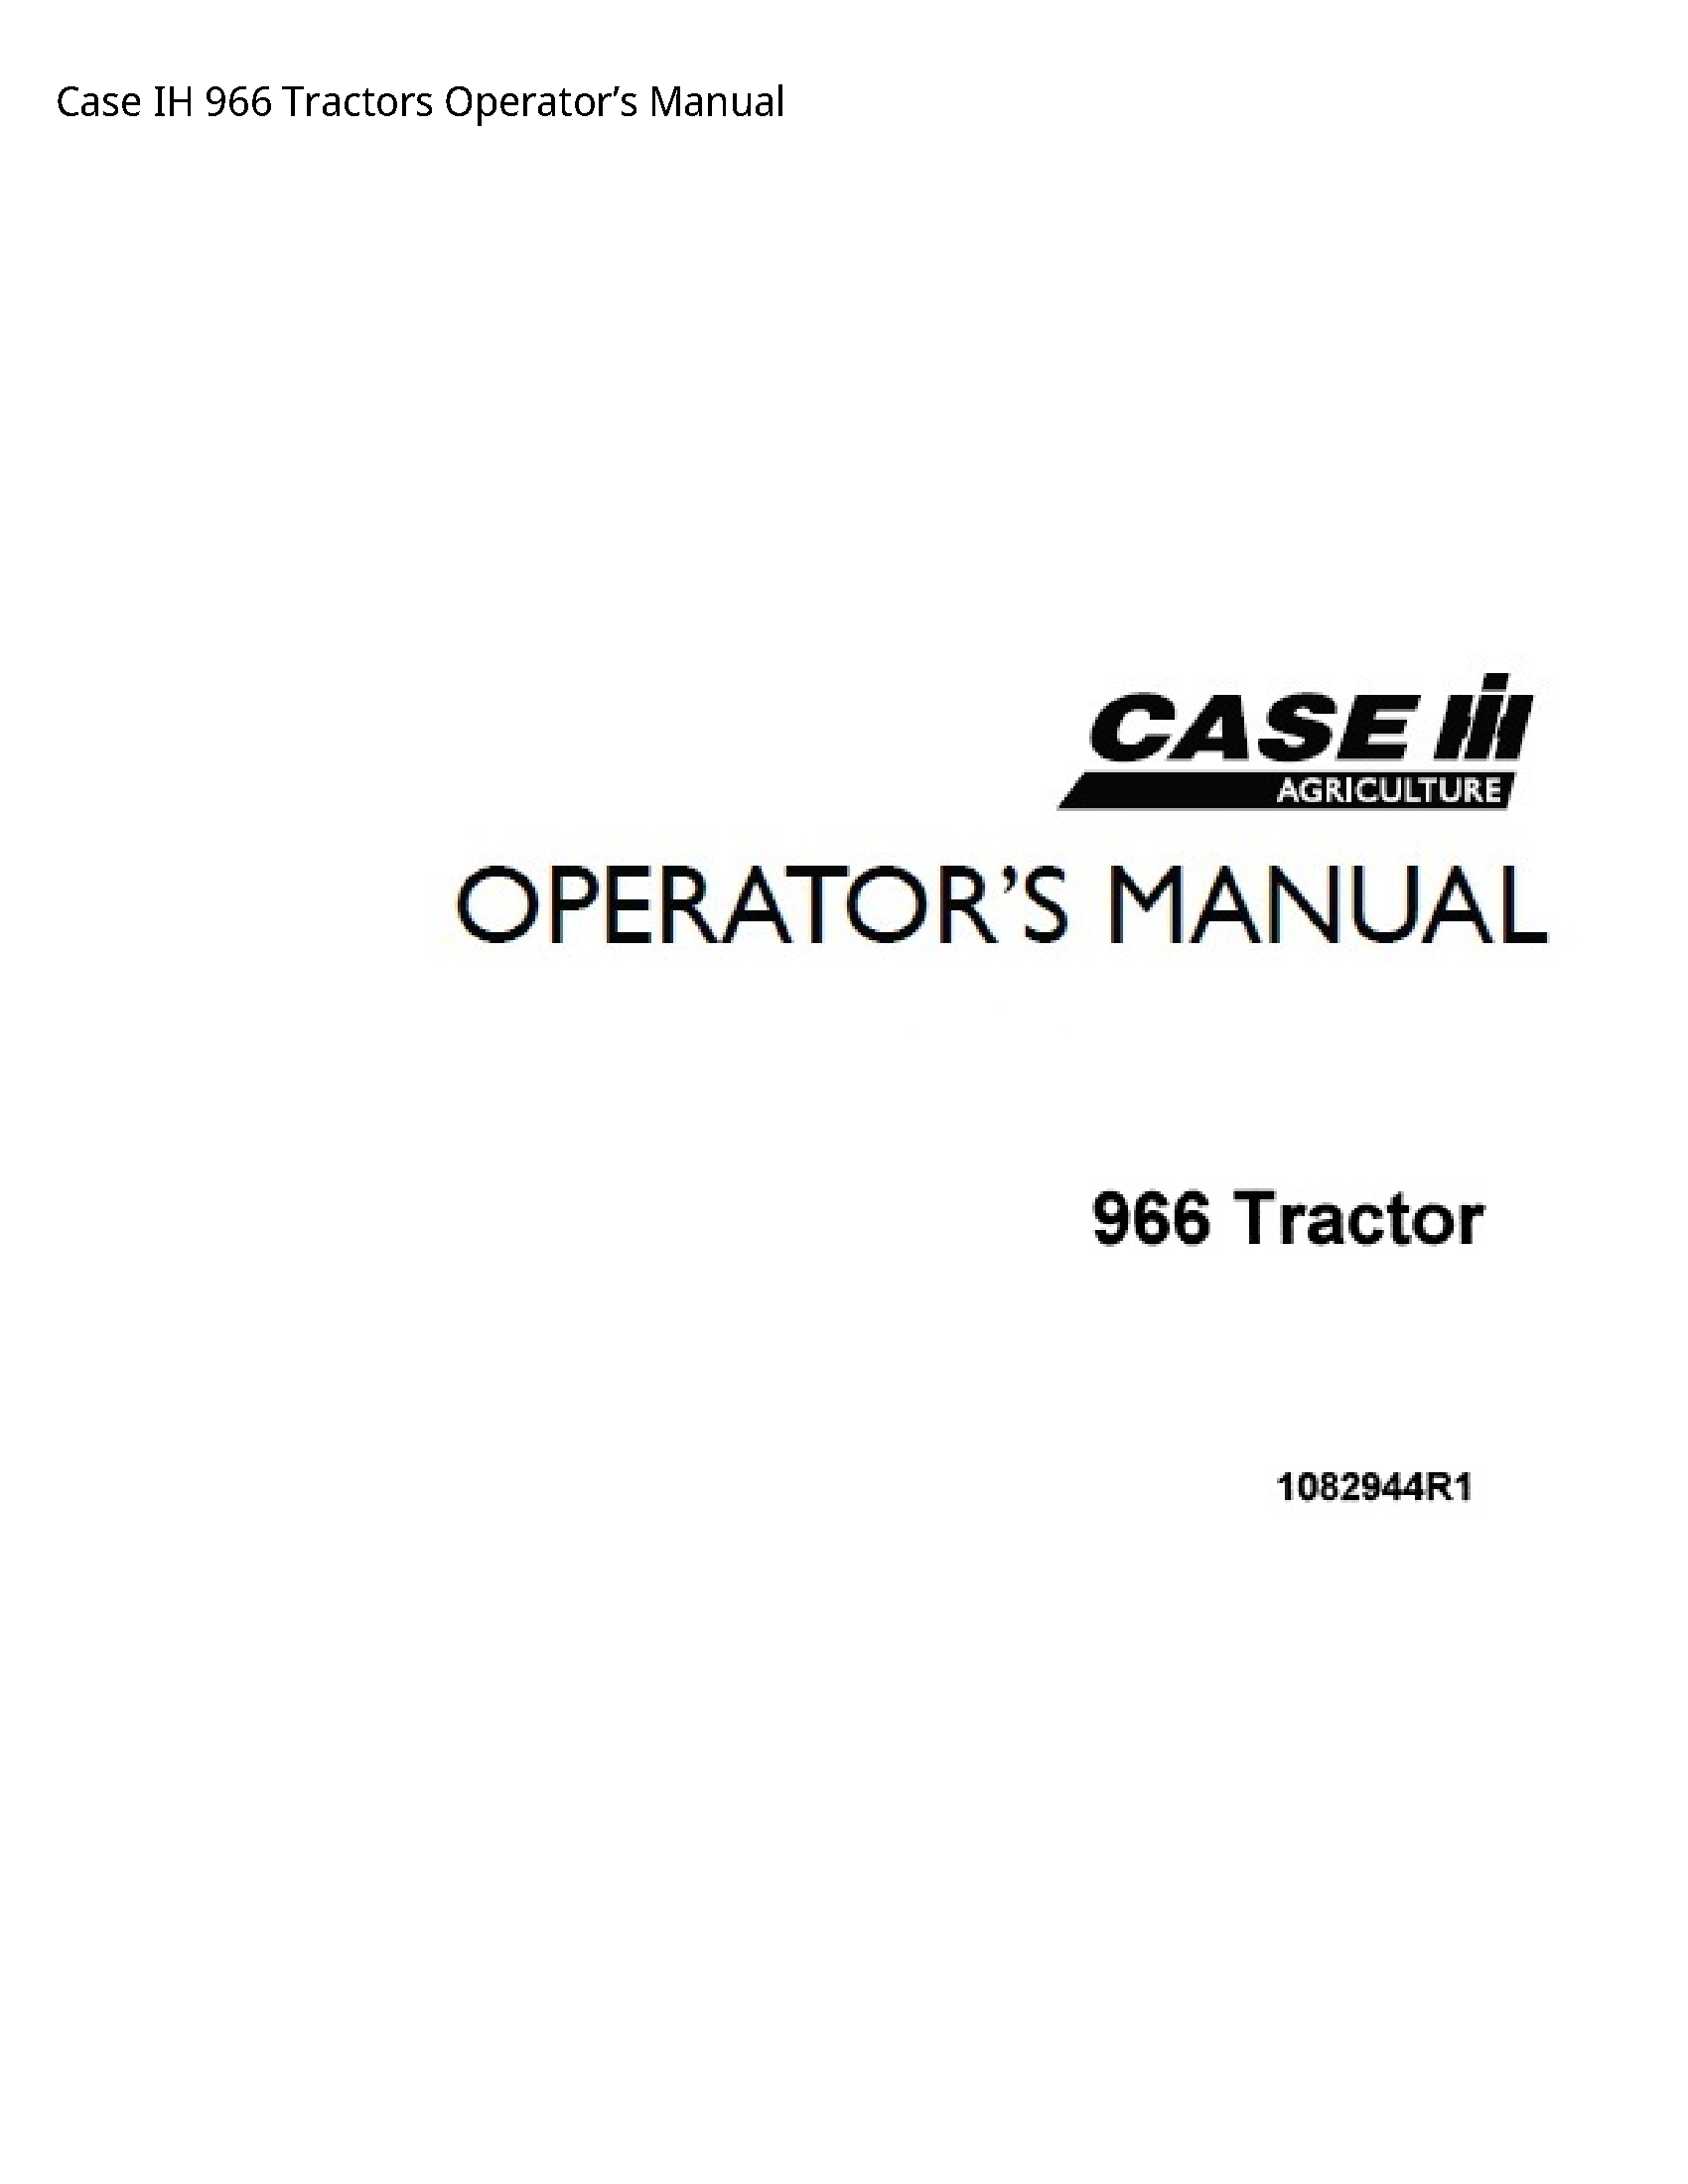 Case/Case IH 966 IH Tractors Operator’s manual